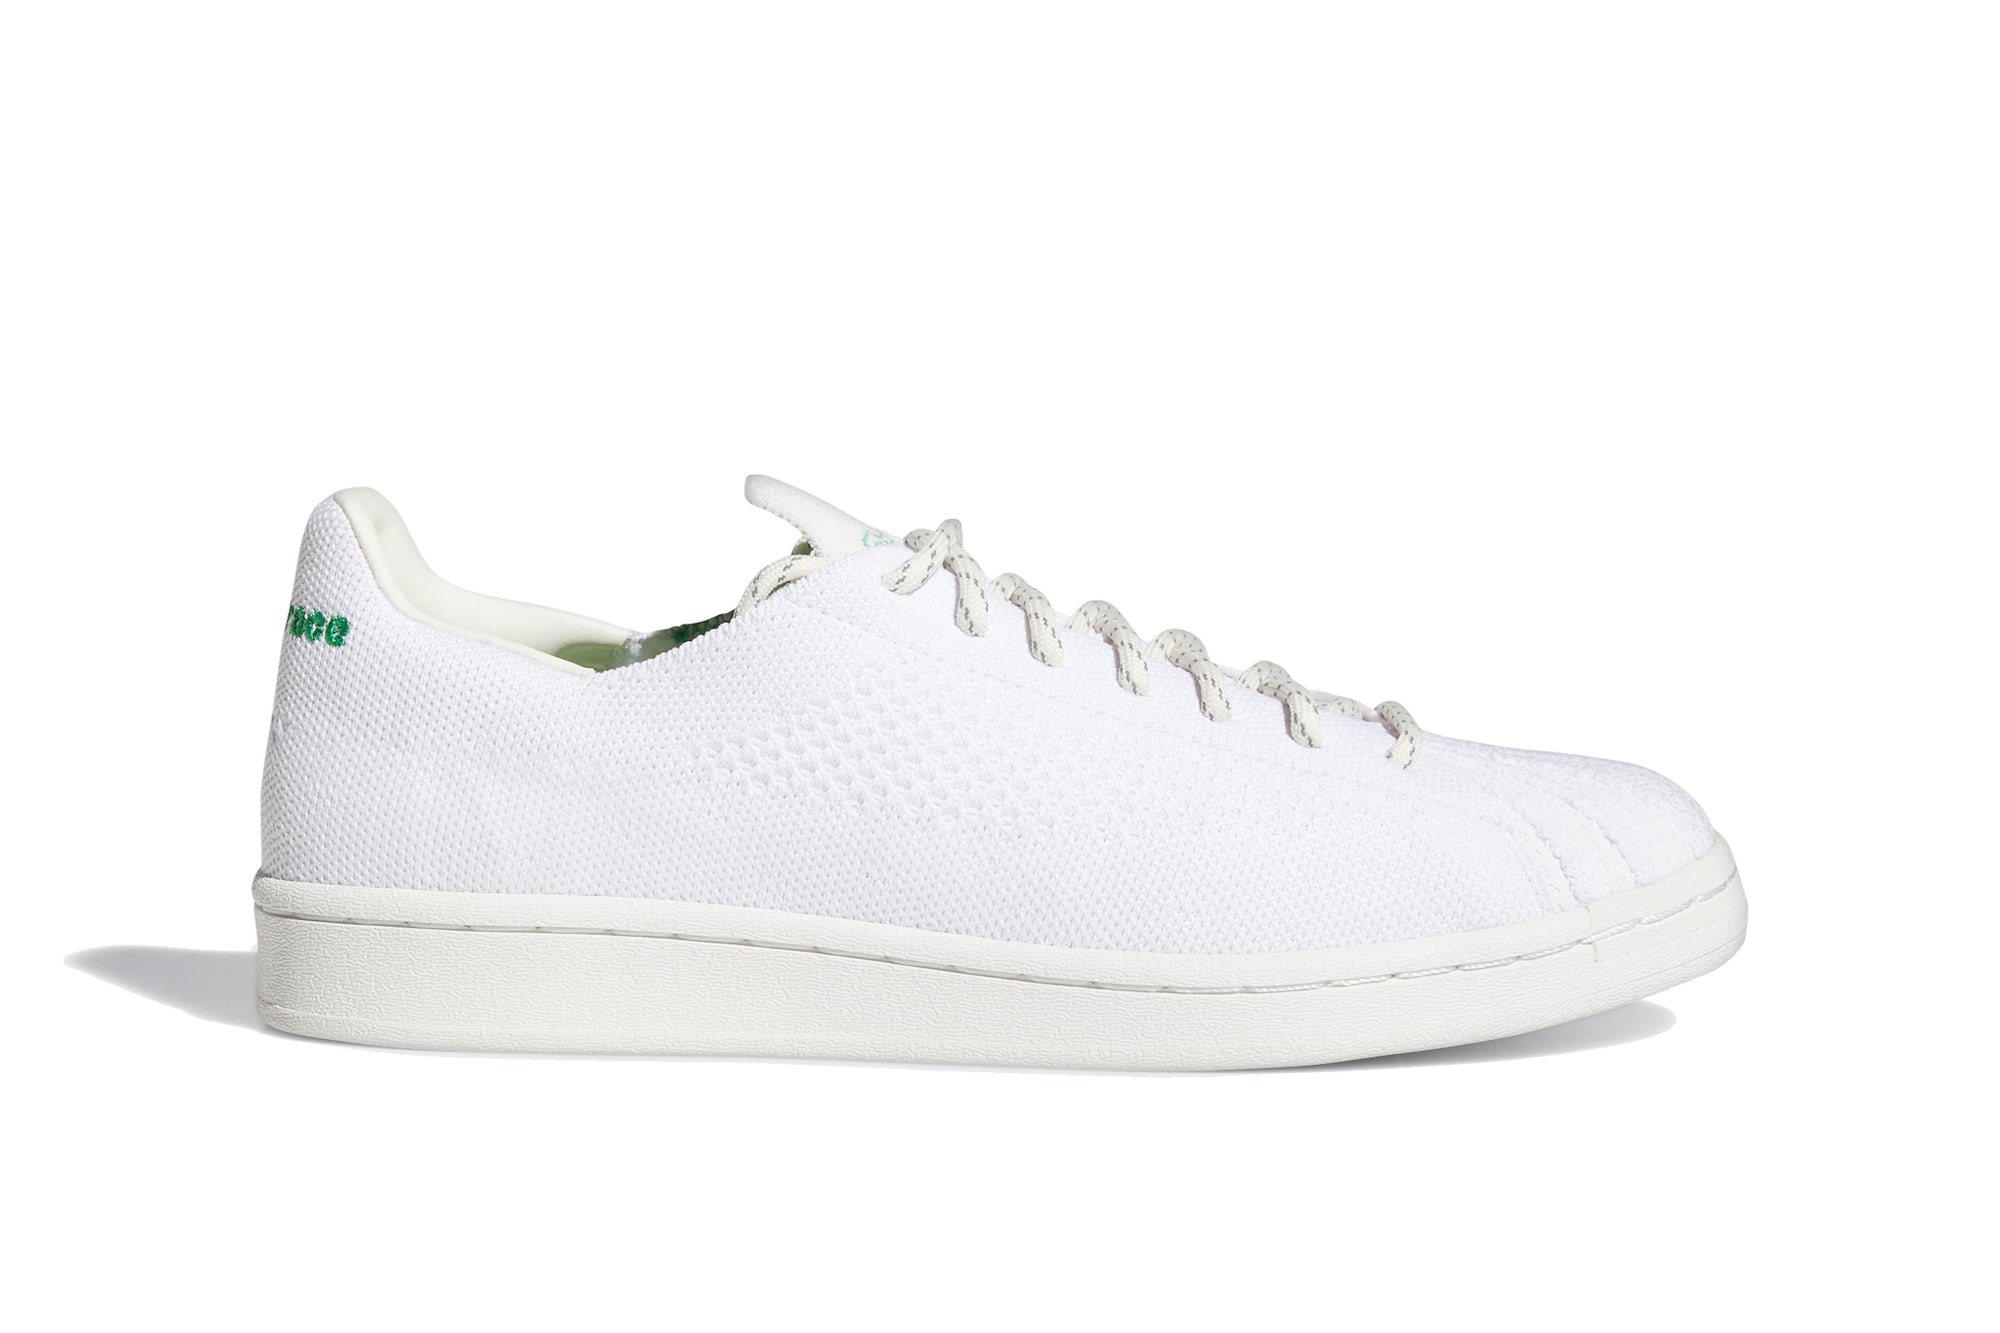 adidas Originals Pharrell Primeknit Superstar Sneaker Black White Release Capsule Collection